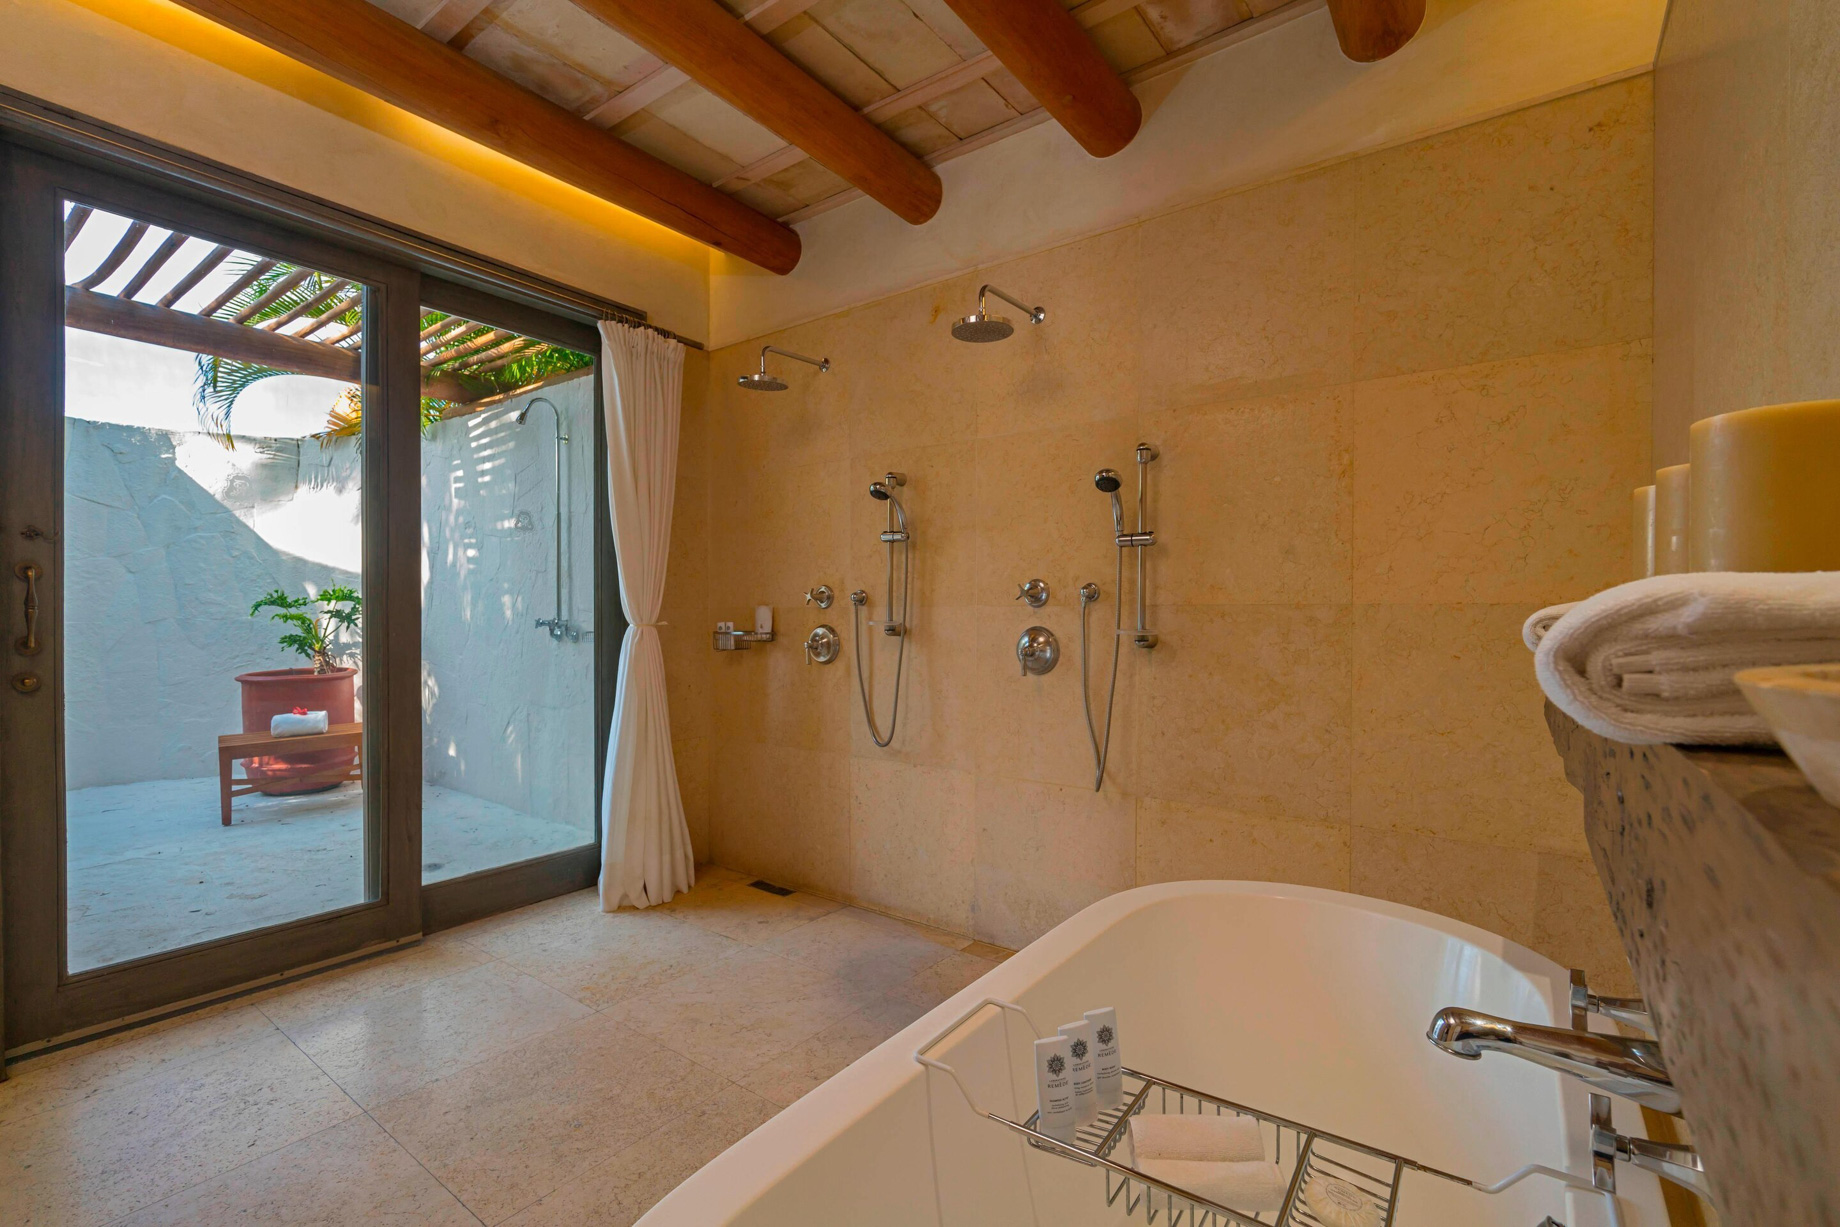 The St. Regis Punta Mita Resort – Nayarit, Mexico – Villa Bathroom and Shower